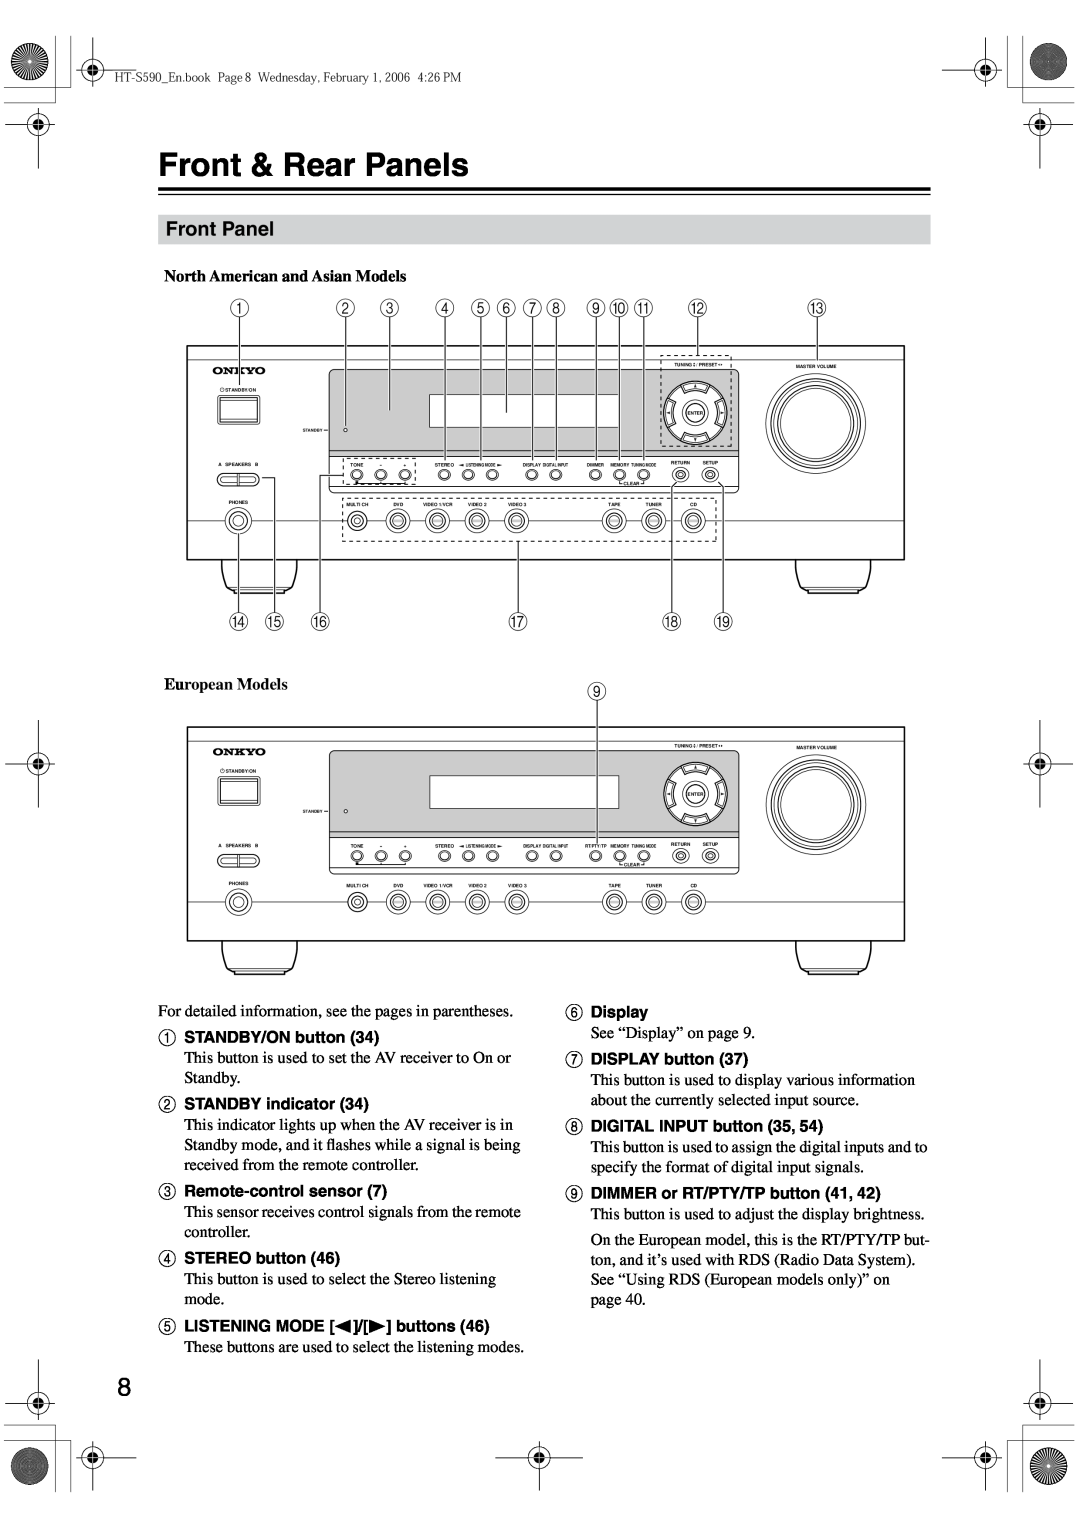 Onkyo SKC-340C, SKF-340F, SKM-340S, SKW-340 instruction manual Front & Rear Panels, Front Panel, 4 5 6 78 9JK, N O P 